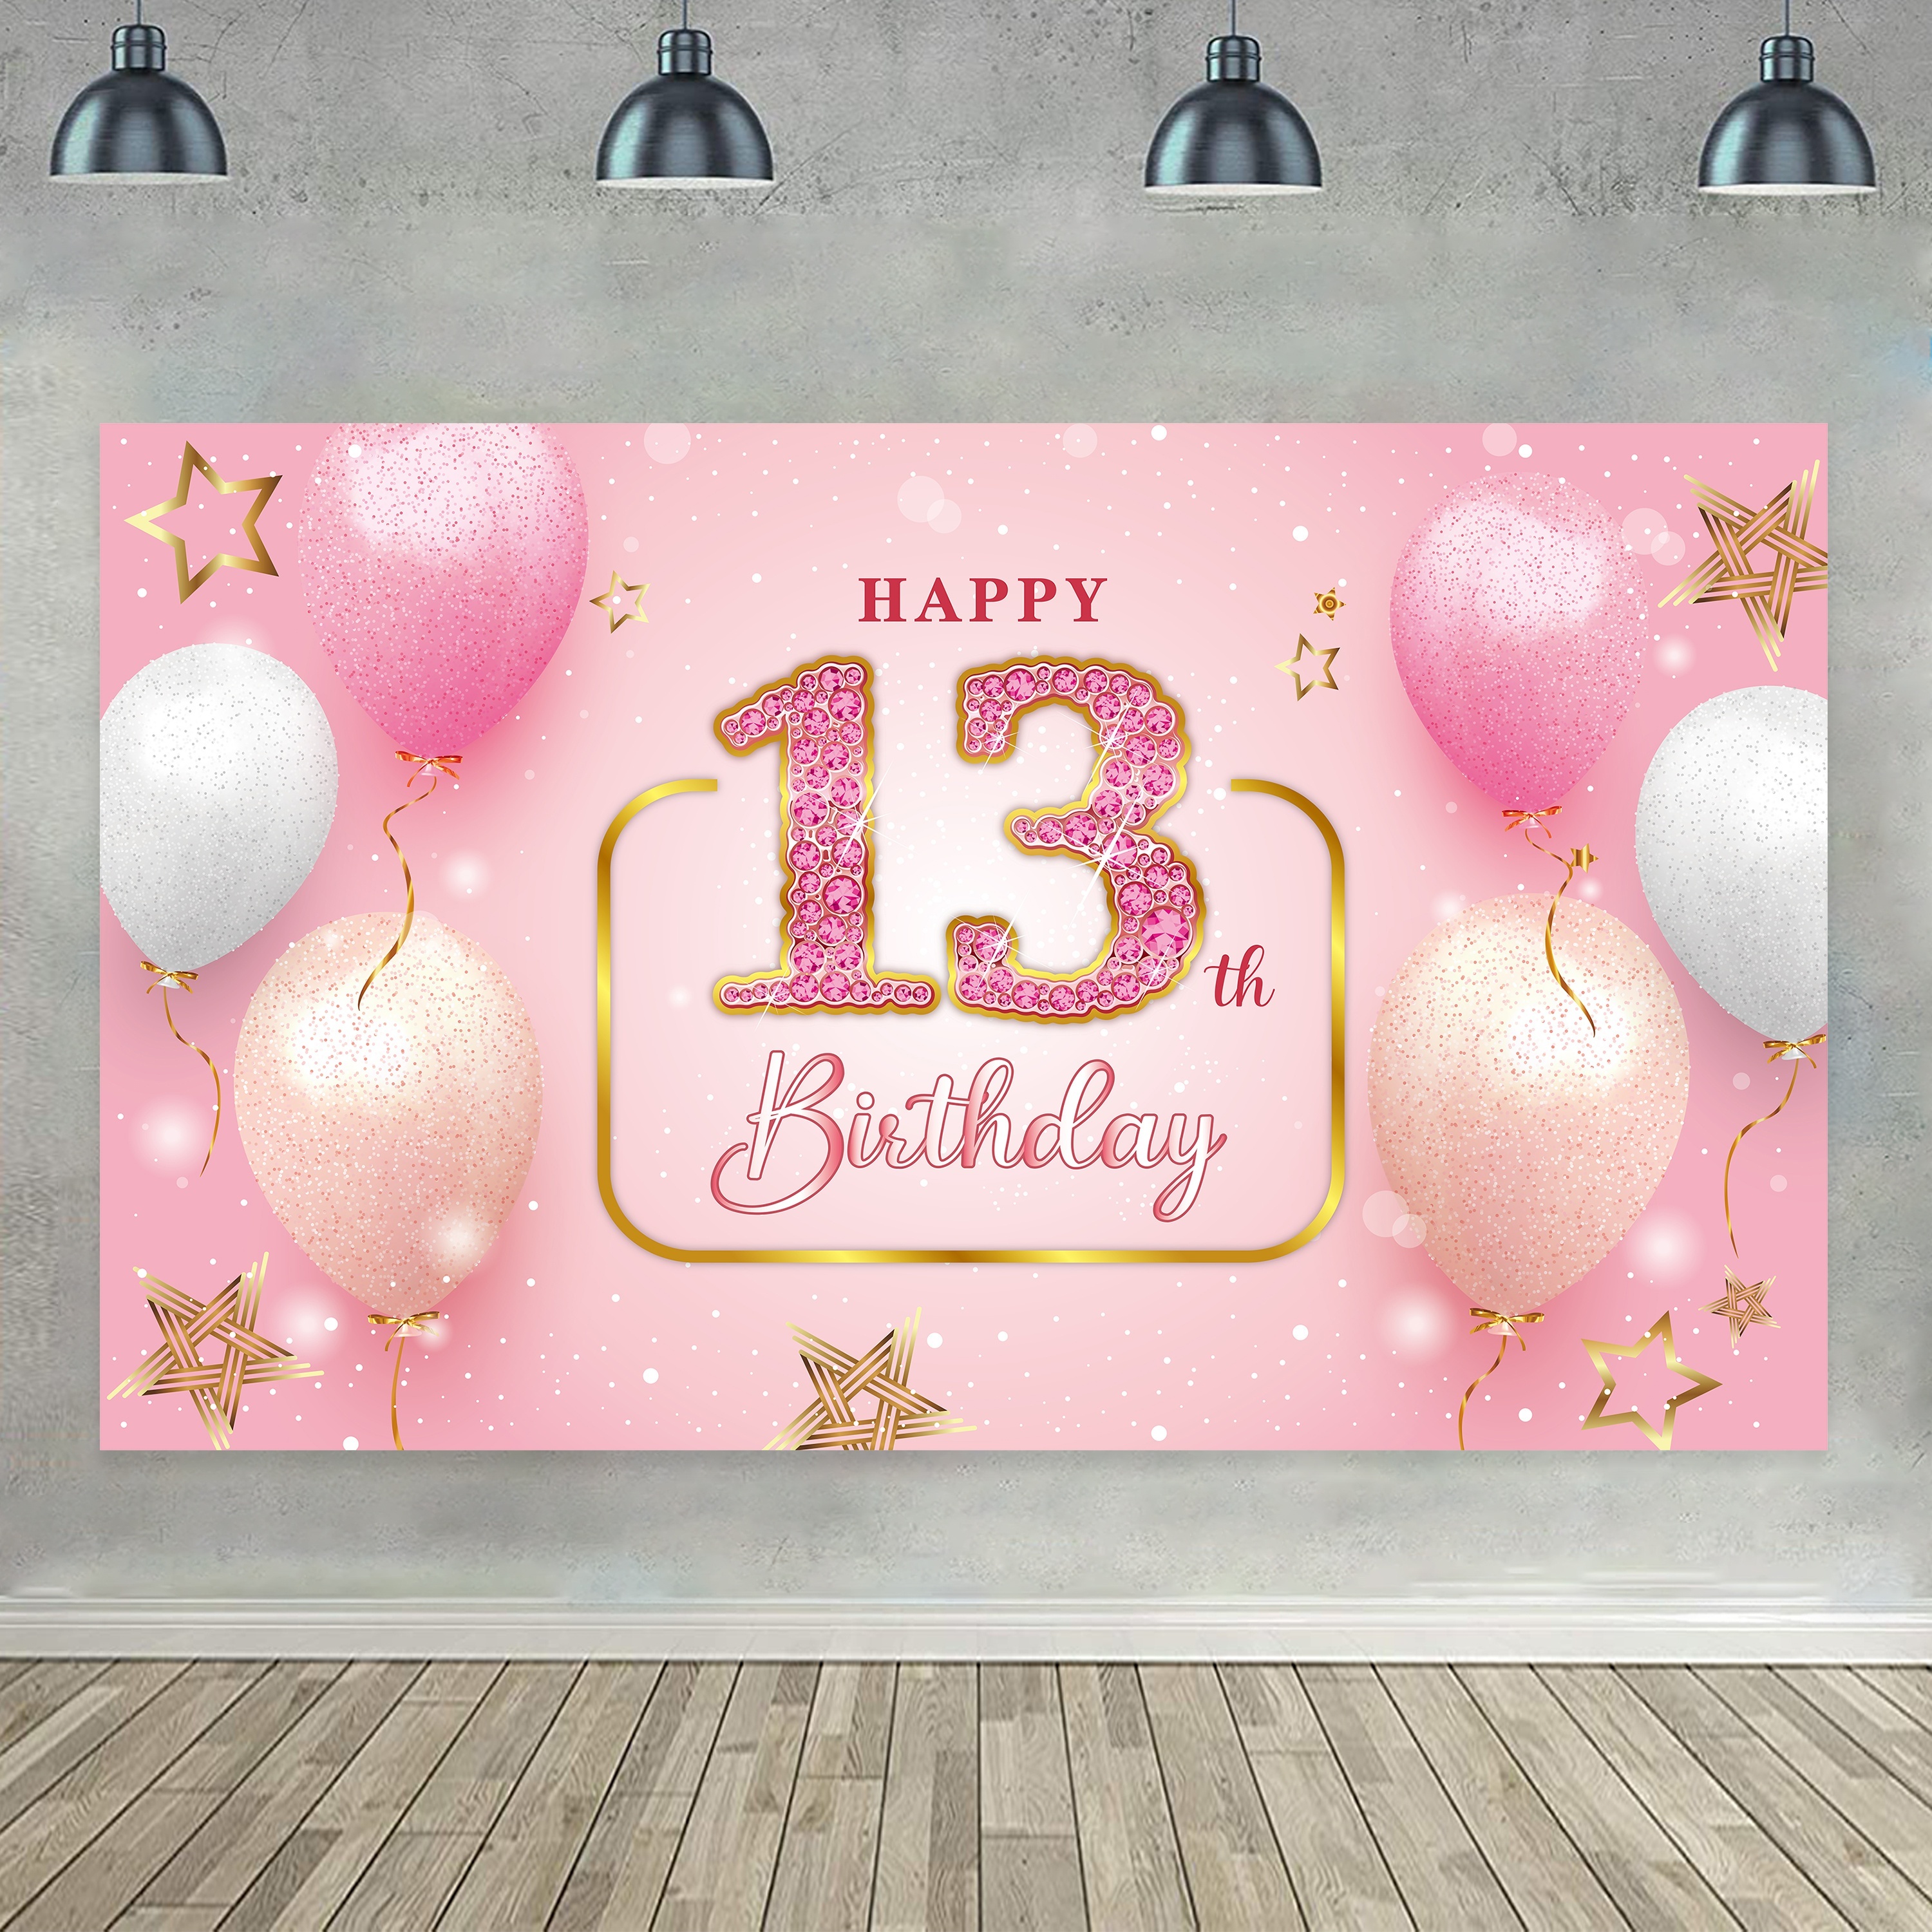 30 Pcs Happy 12nd Birthday Latex Balloons Princess Balloons Pink Balloons  for Girl 12 Years Old Birthday Party Decorations